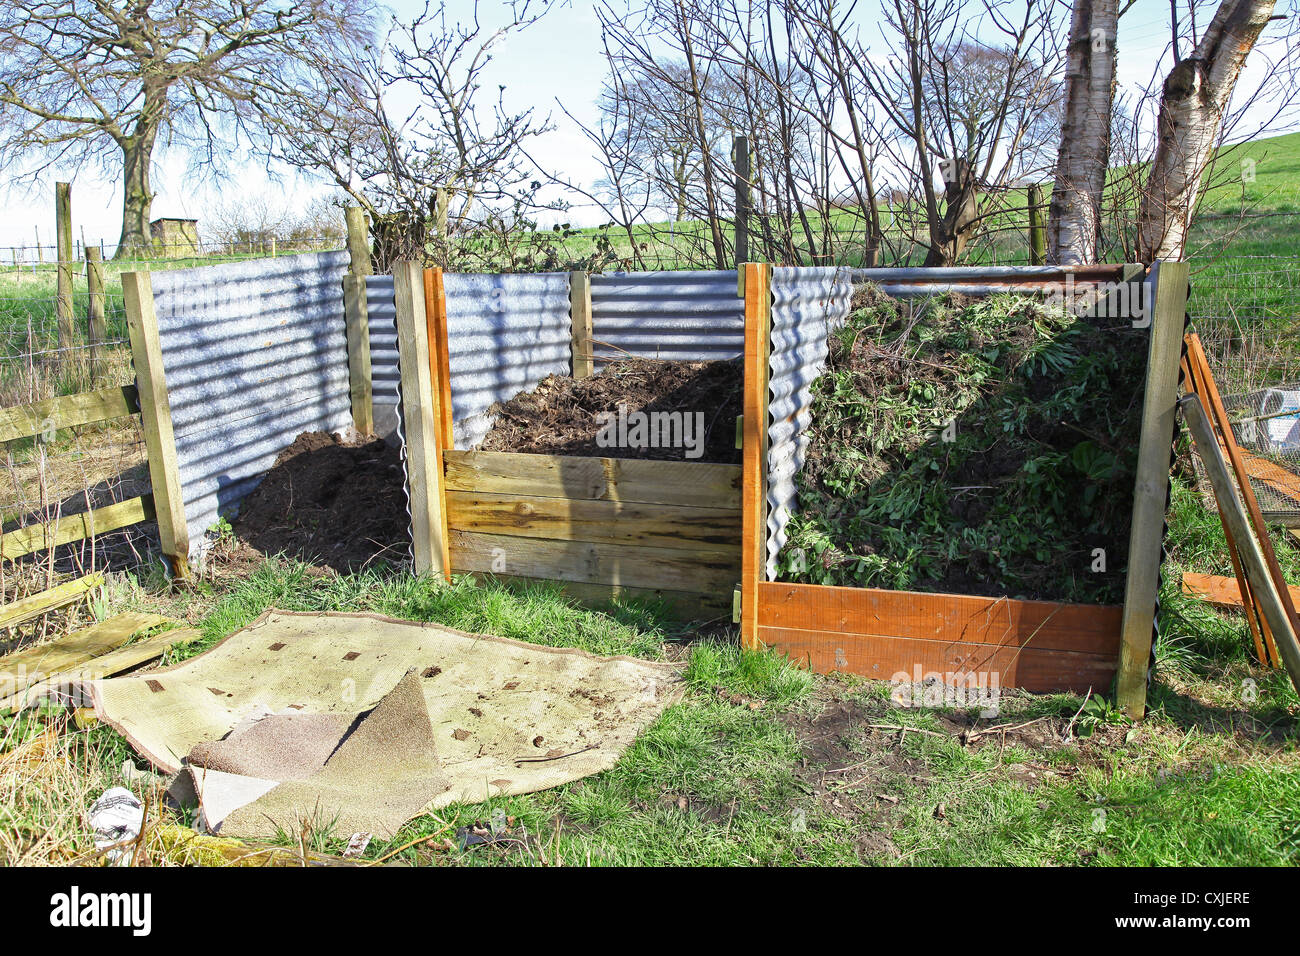 A home made 3 three bin compost heap garden bins Stock Photo